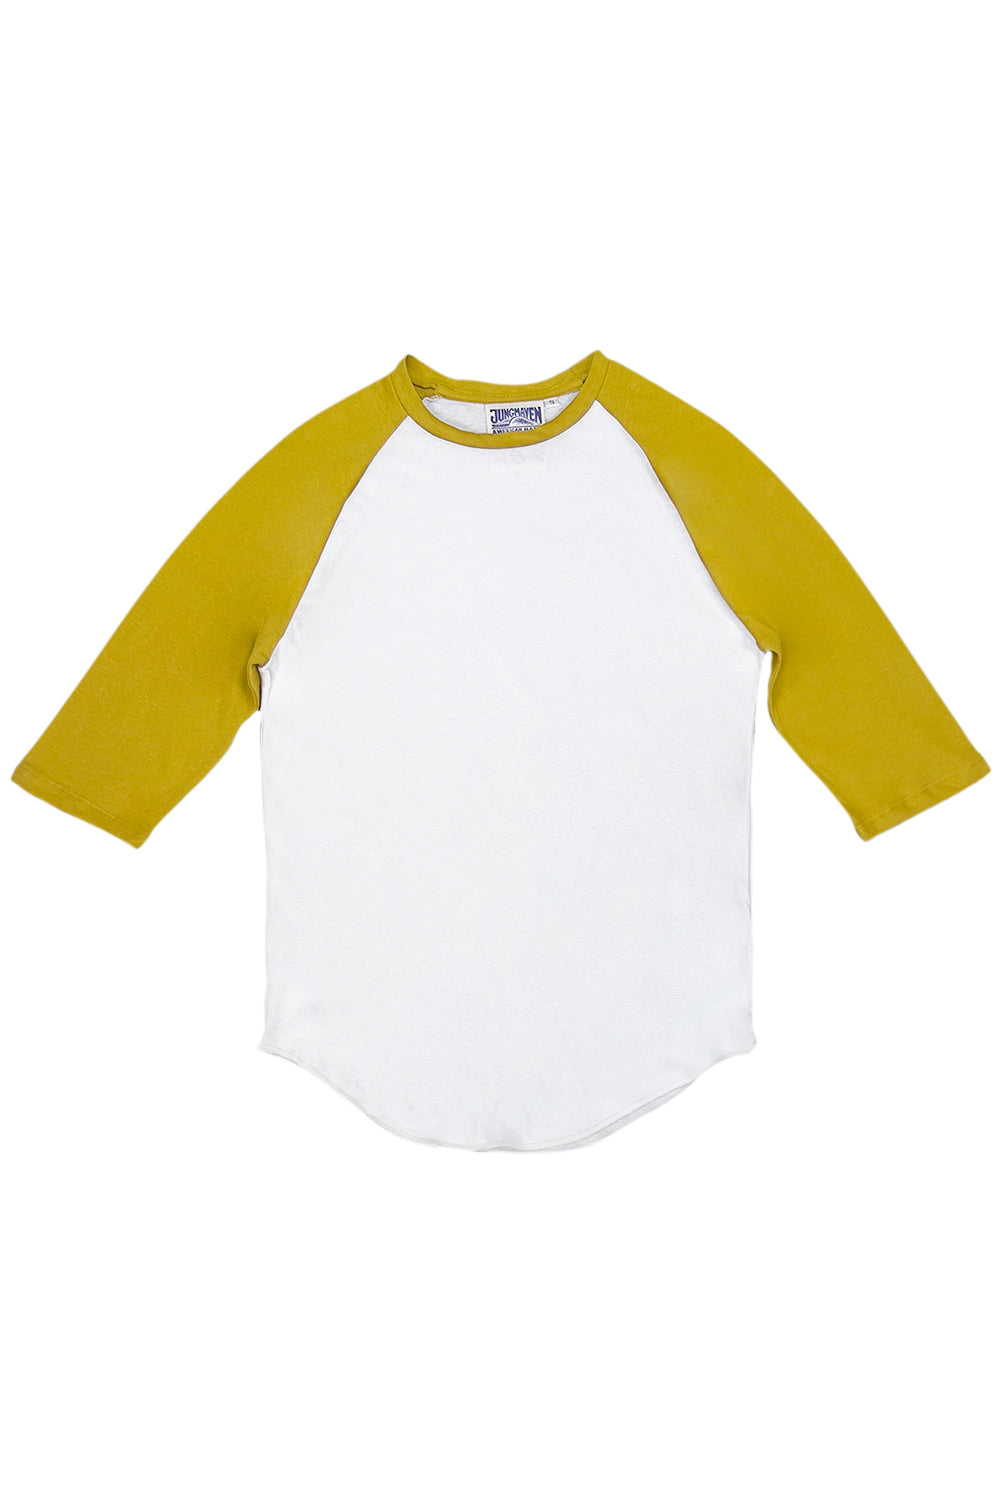 Stones 3/4 Sleeve Raglan | Jungmaven Hemp Clothing & Accessories / Color: Citrine Yellow Sleeve/White Body